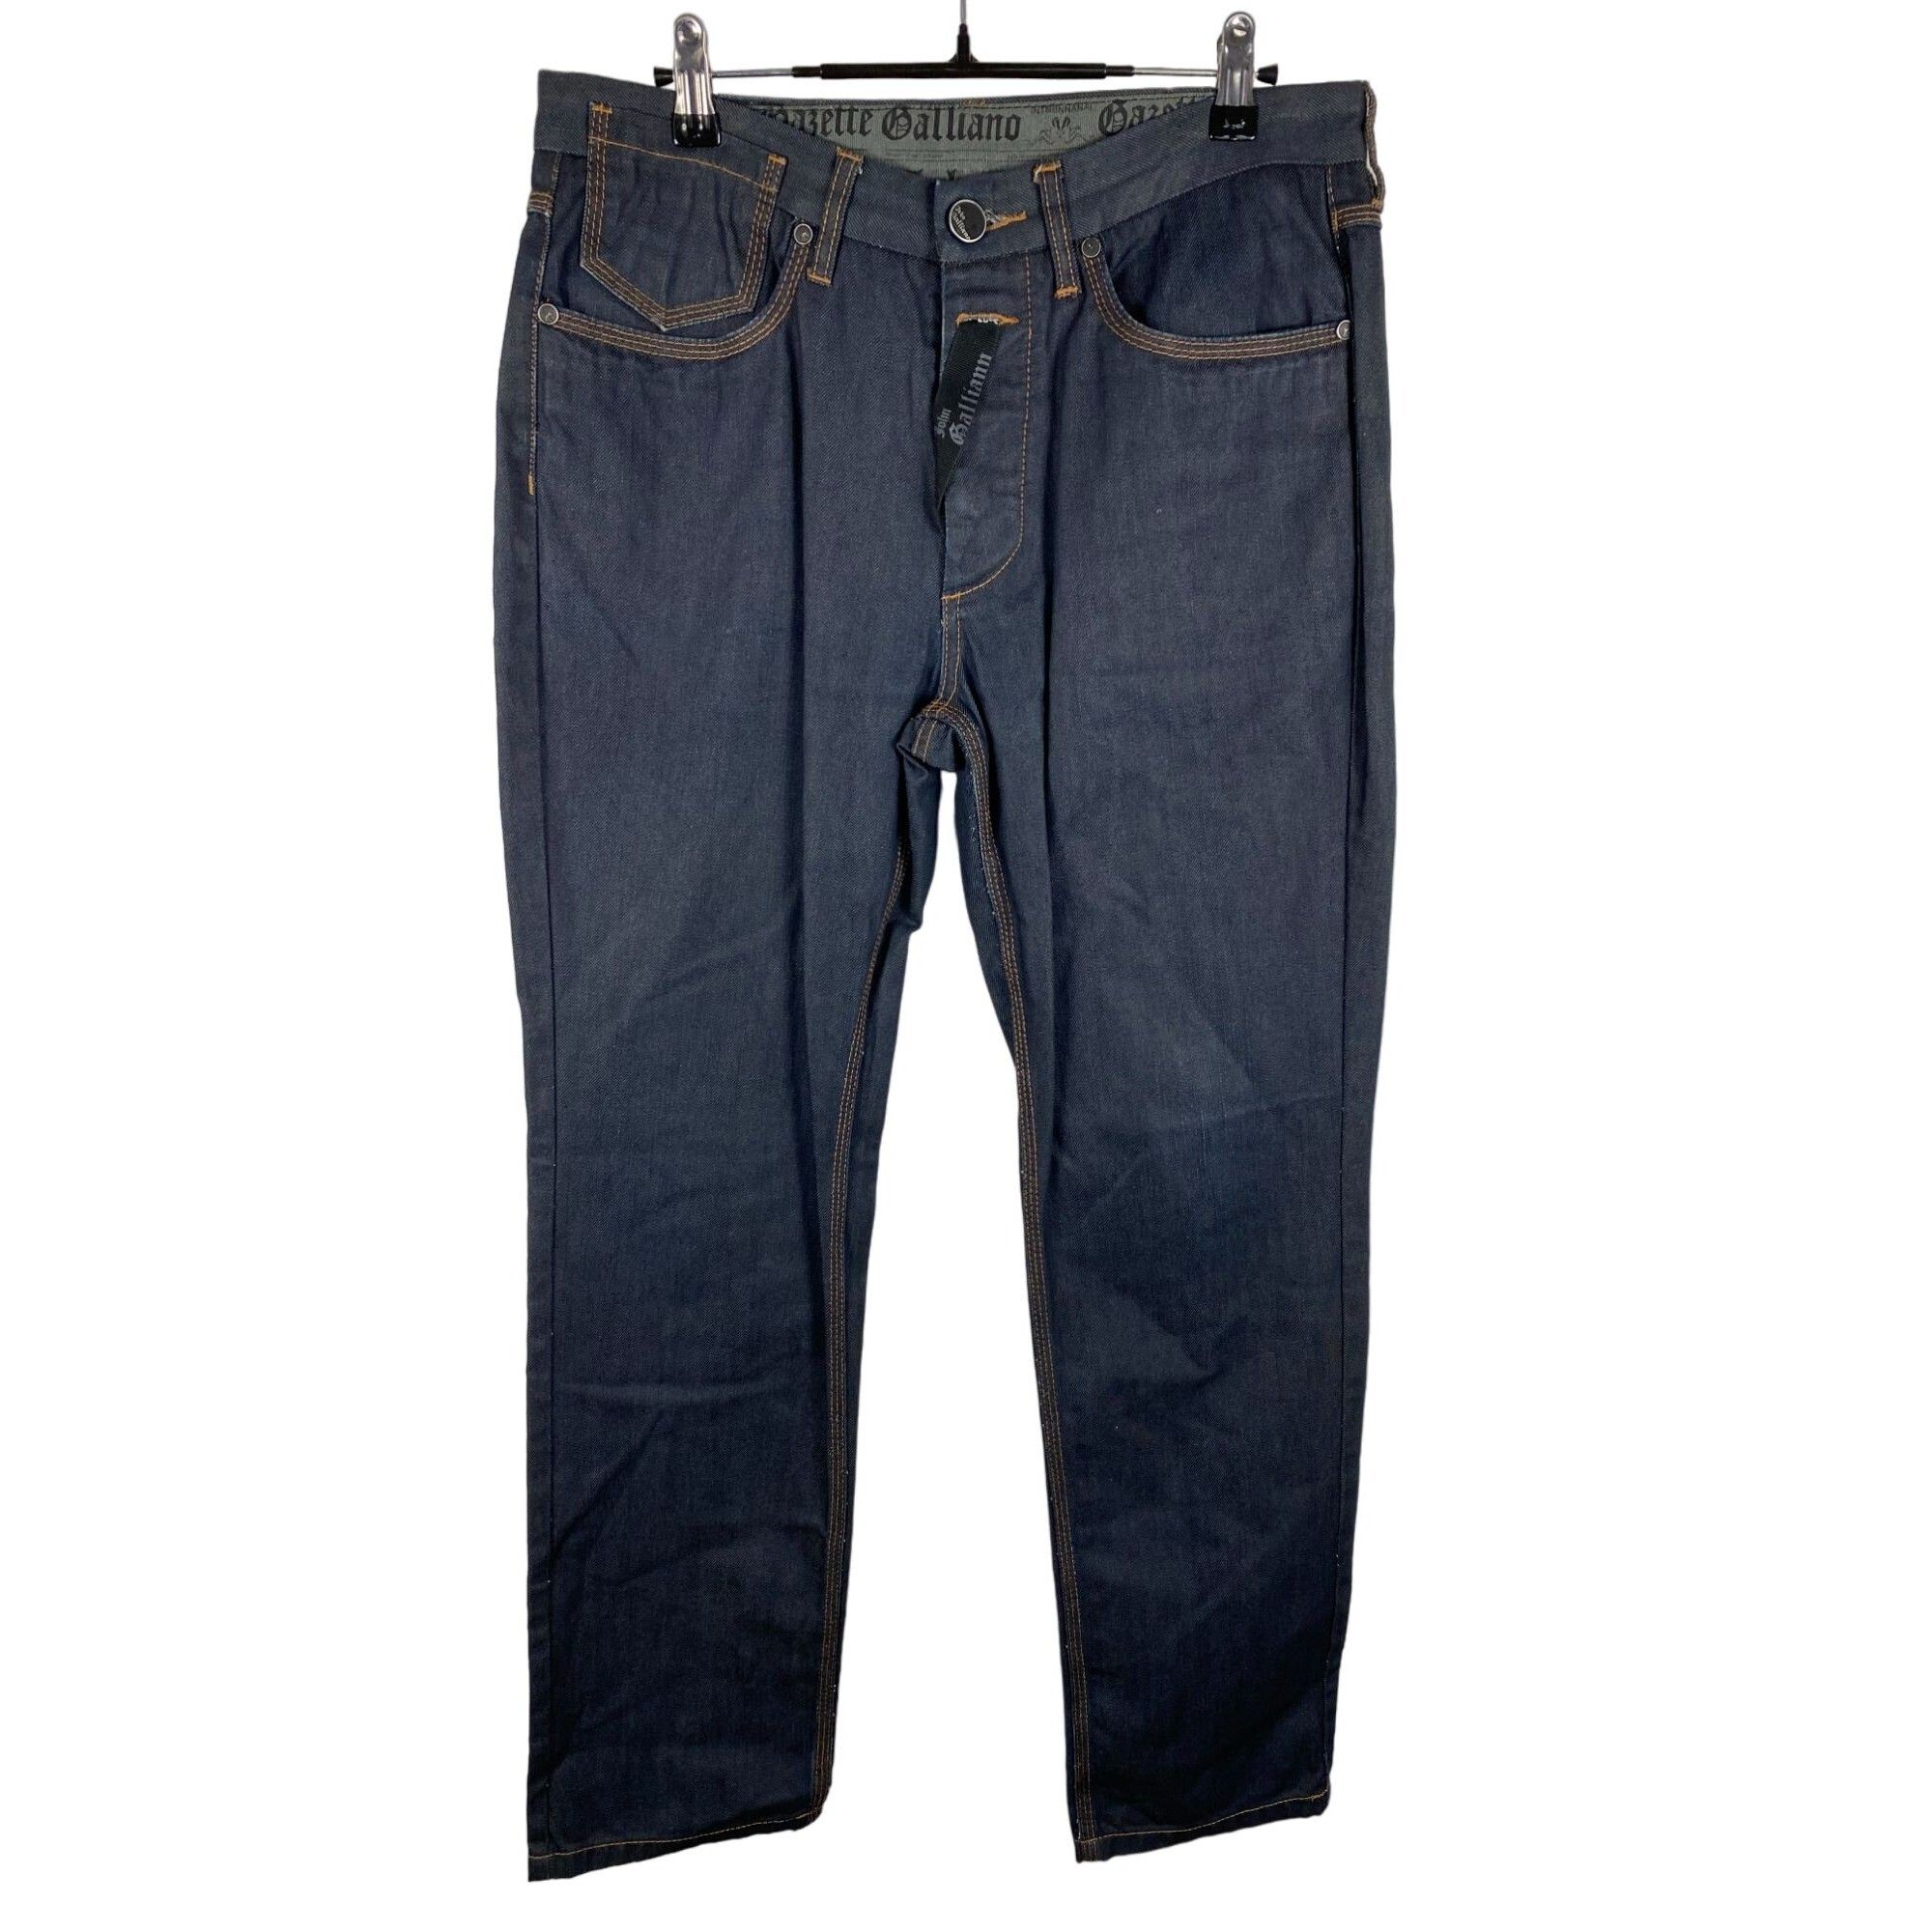 John Galliano John Galliano Relaxed Fit Denim Jeans Men's 33x30 A142 ...